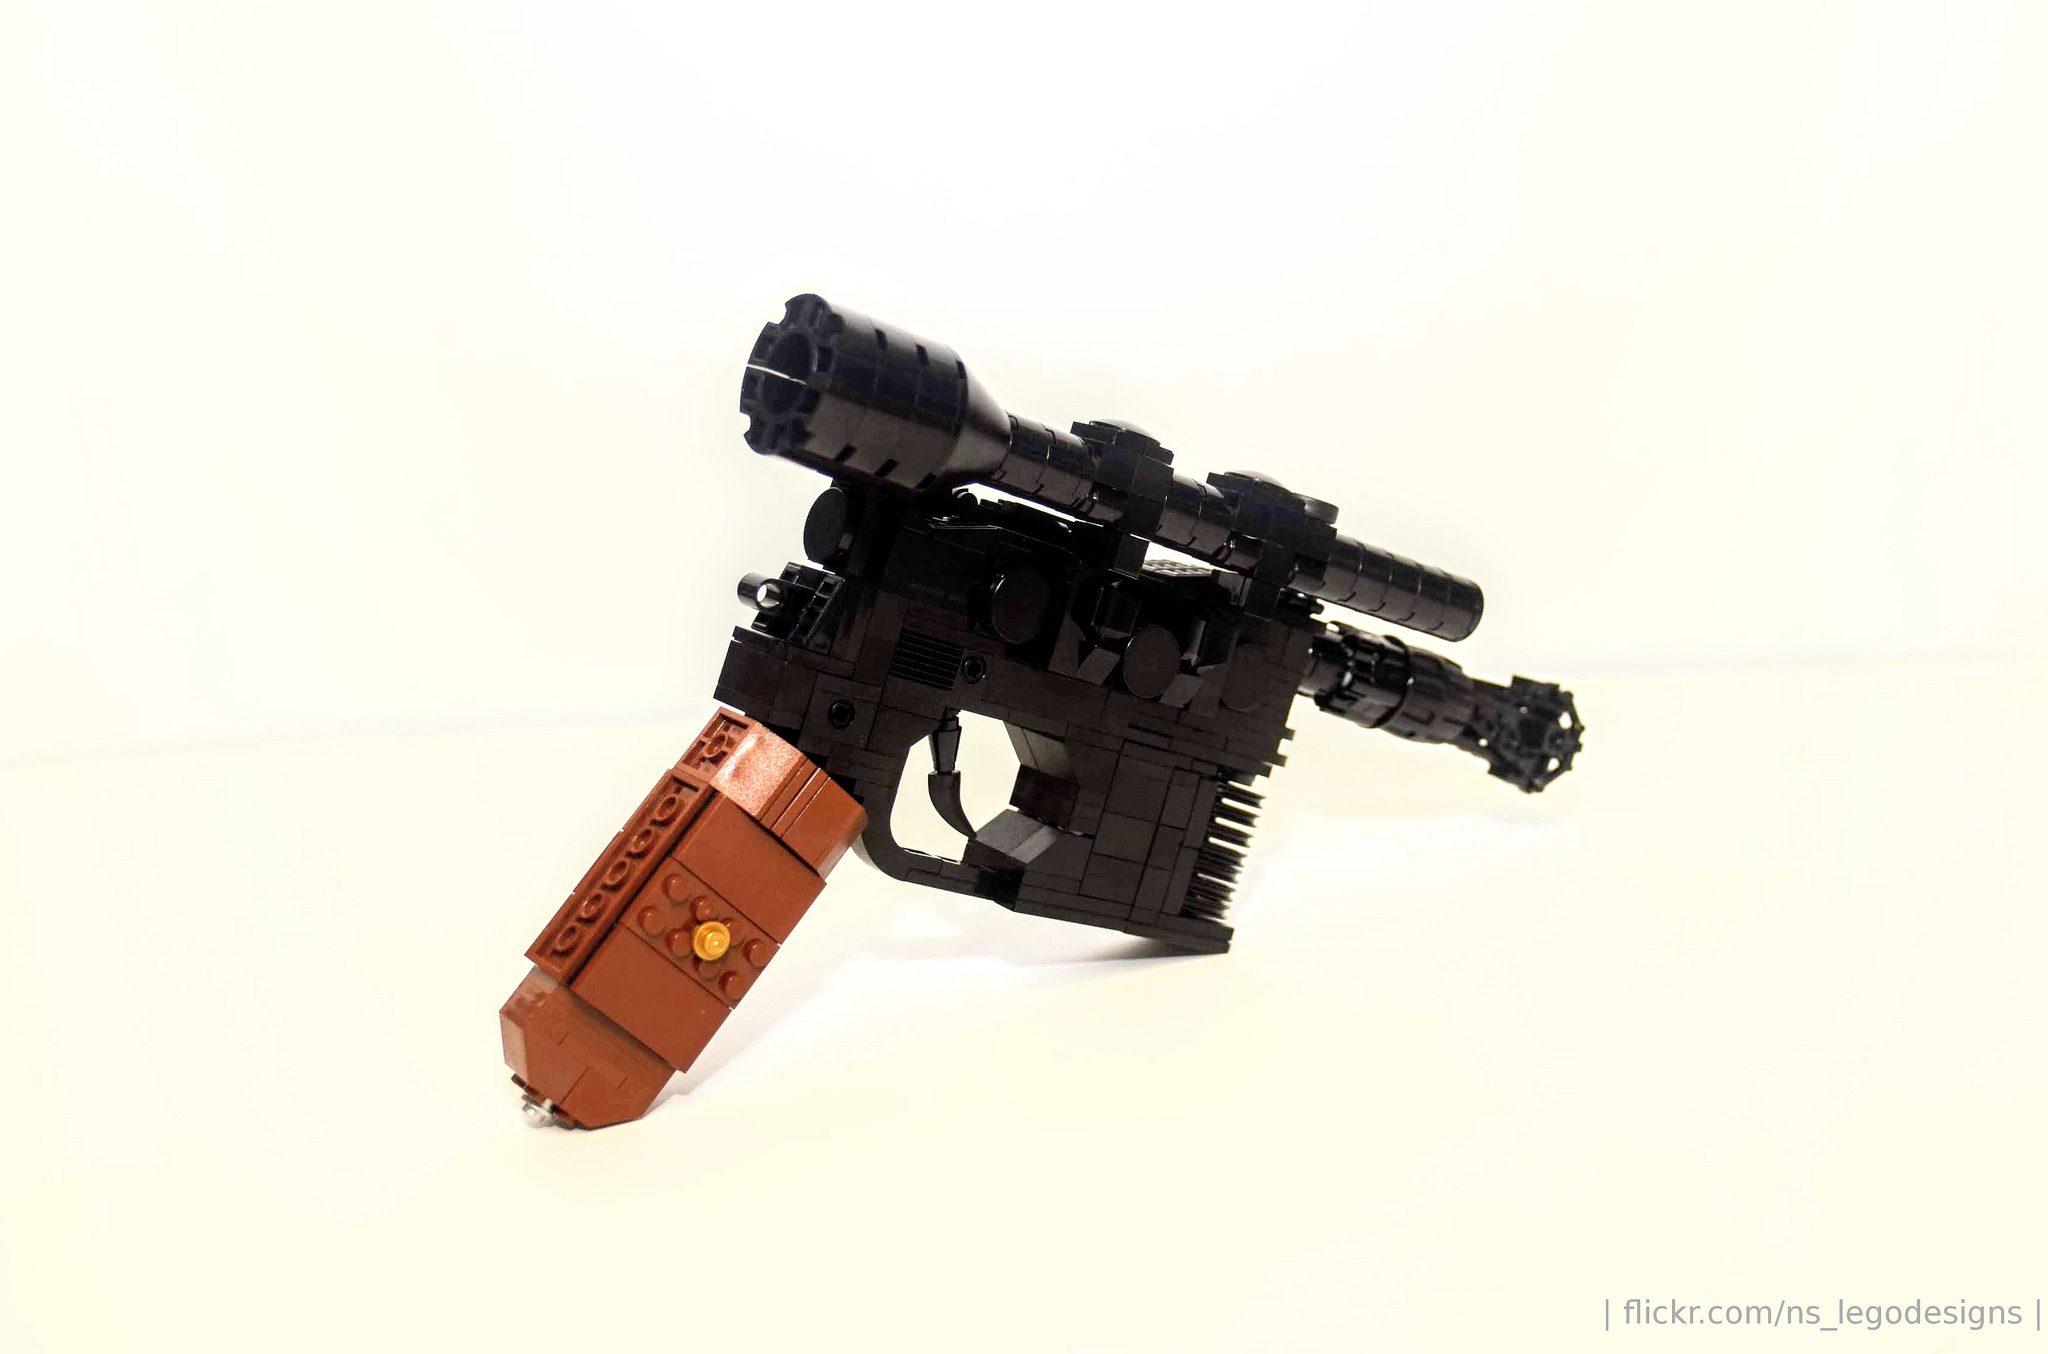 LEGO Gun of the Week